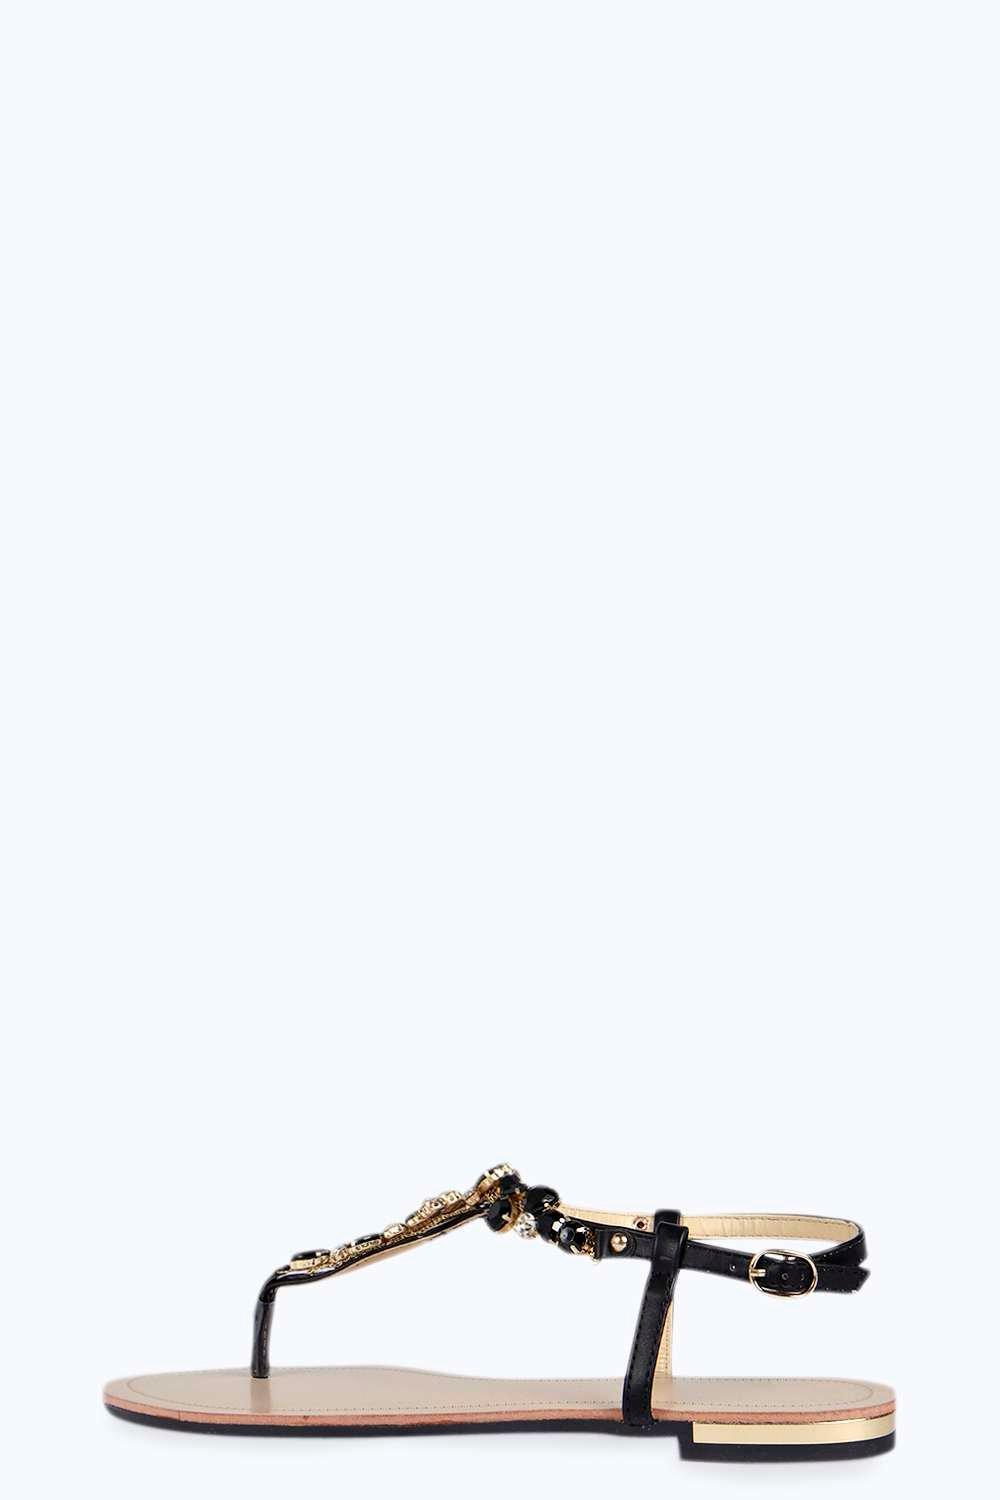 Tessa T-Bar Jewel Flat Sandals at boohoo.com